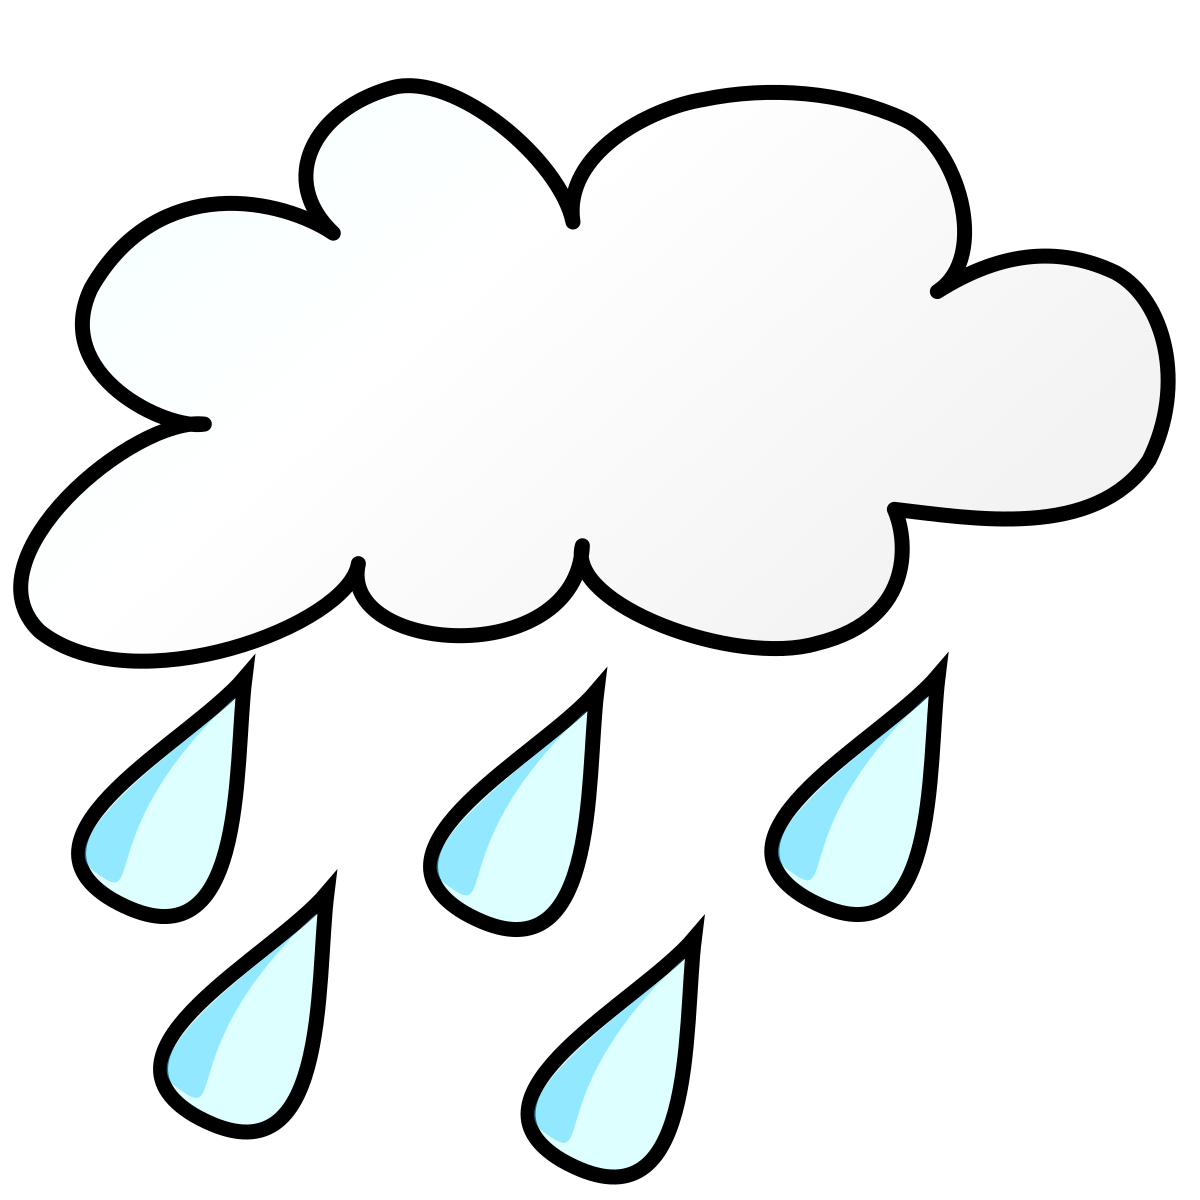 Файл:Rain01.svg — Википедия.